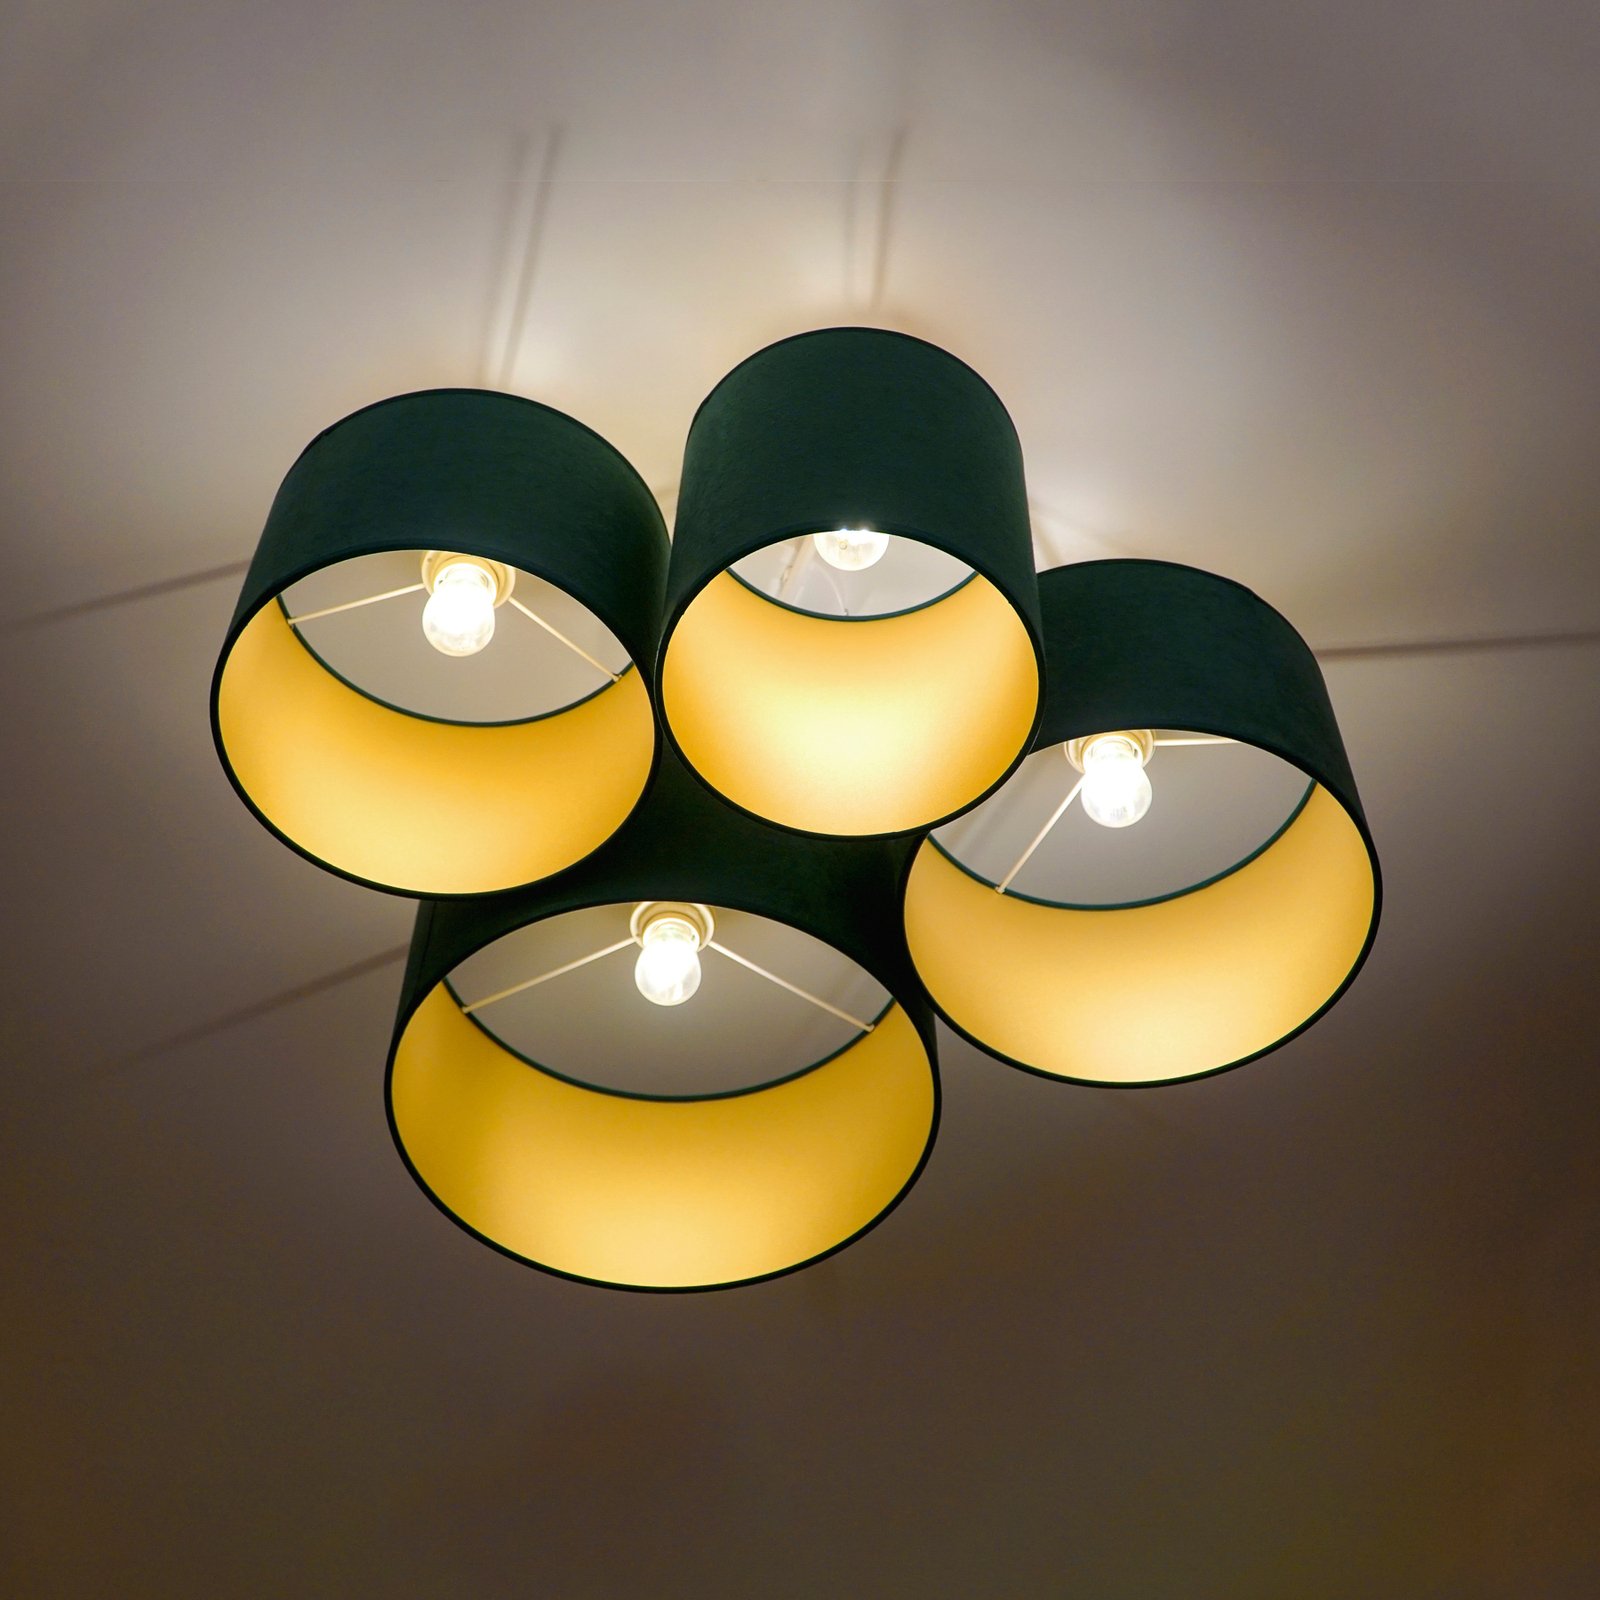 Euluna Lodge ceiling light, 4-bulb, green/gold